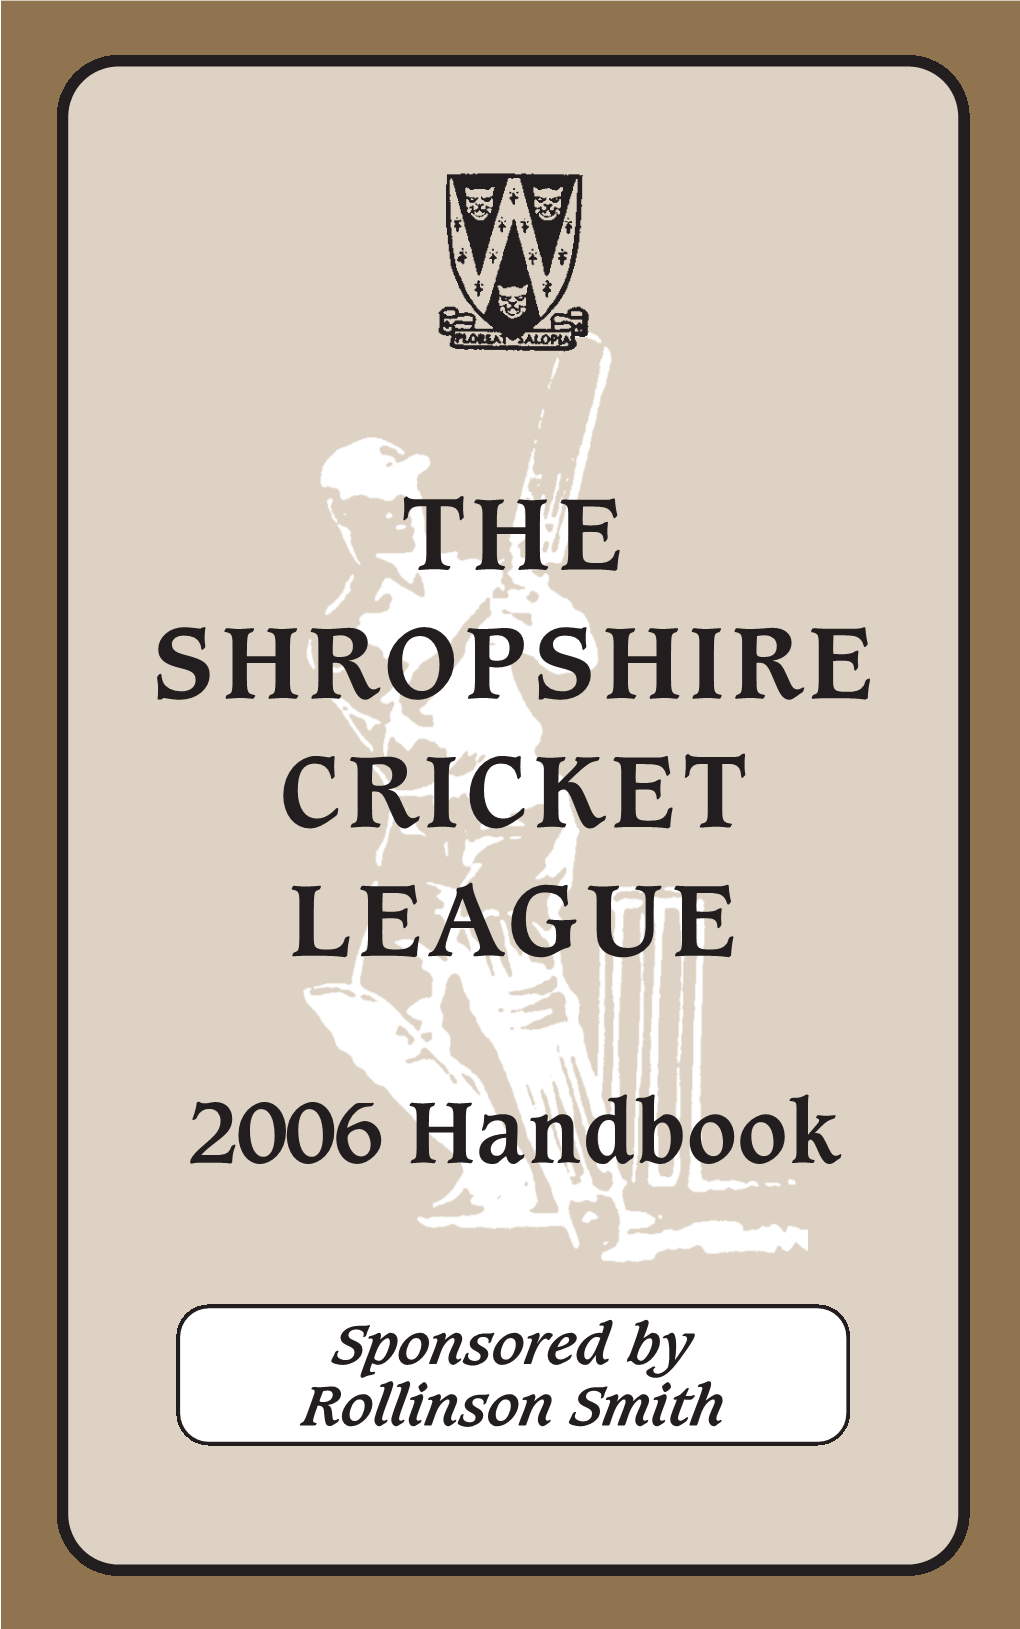 League Handbook 2006